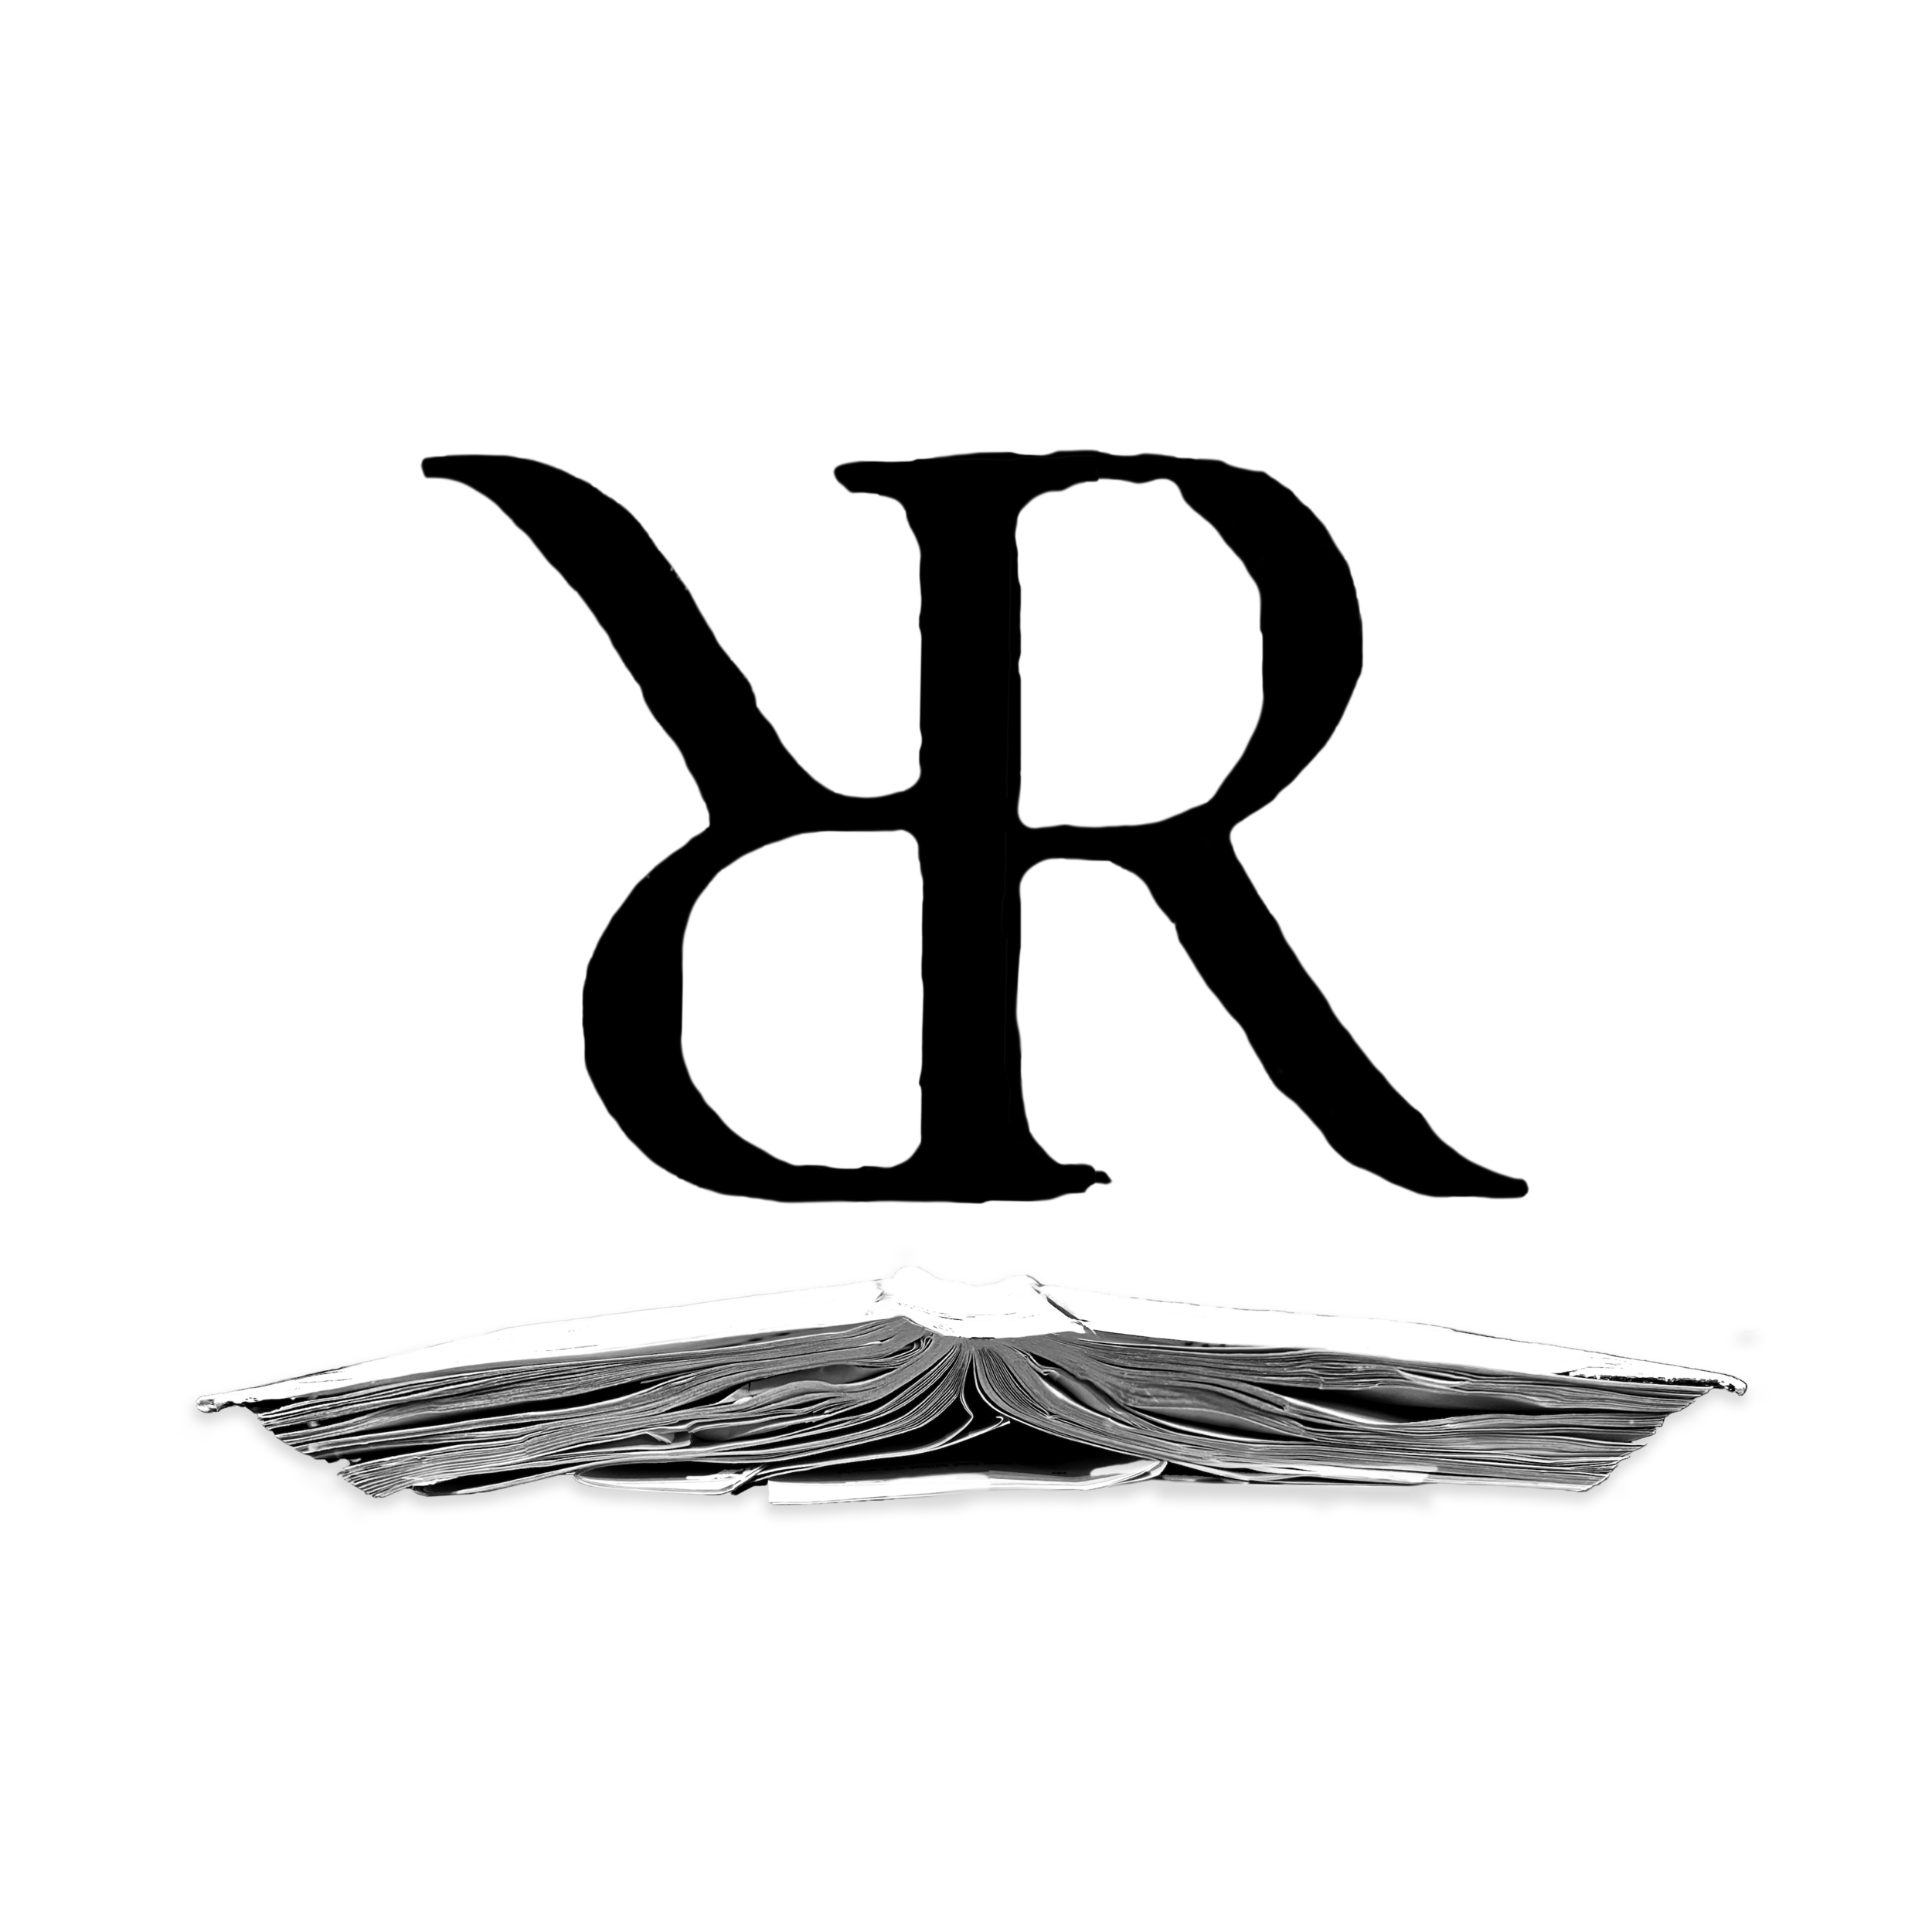 Ryan - [Graphic Design/Digital Media] - Personal Branding Project